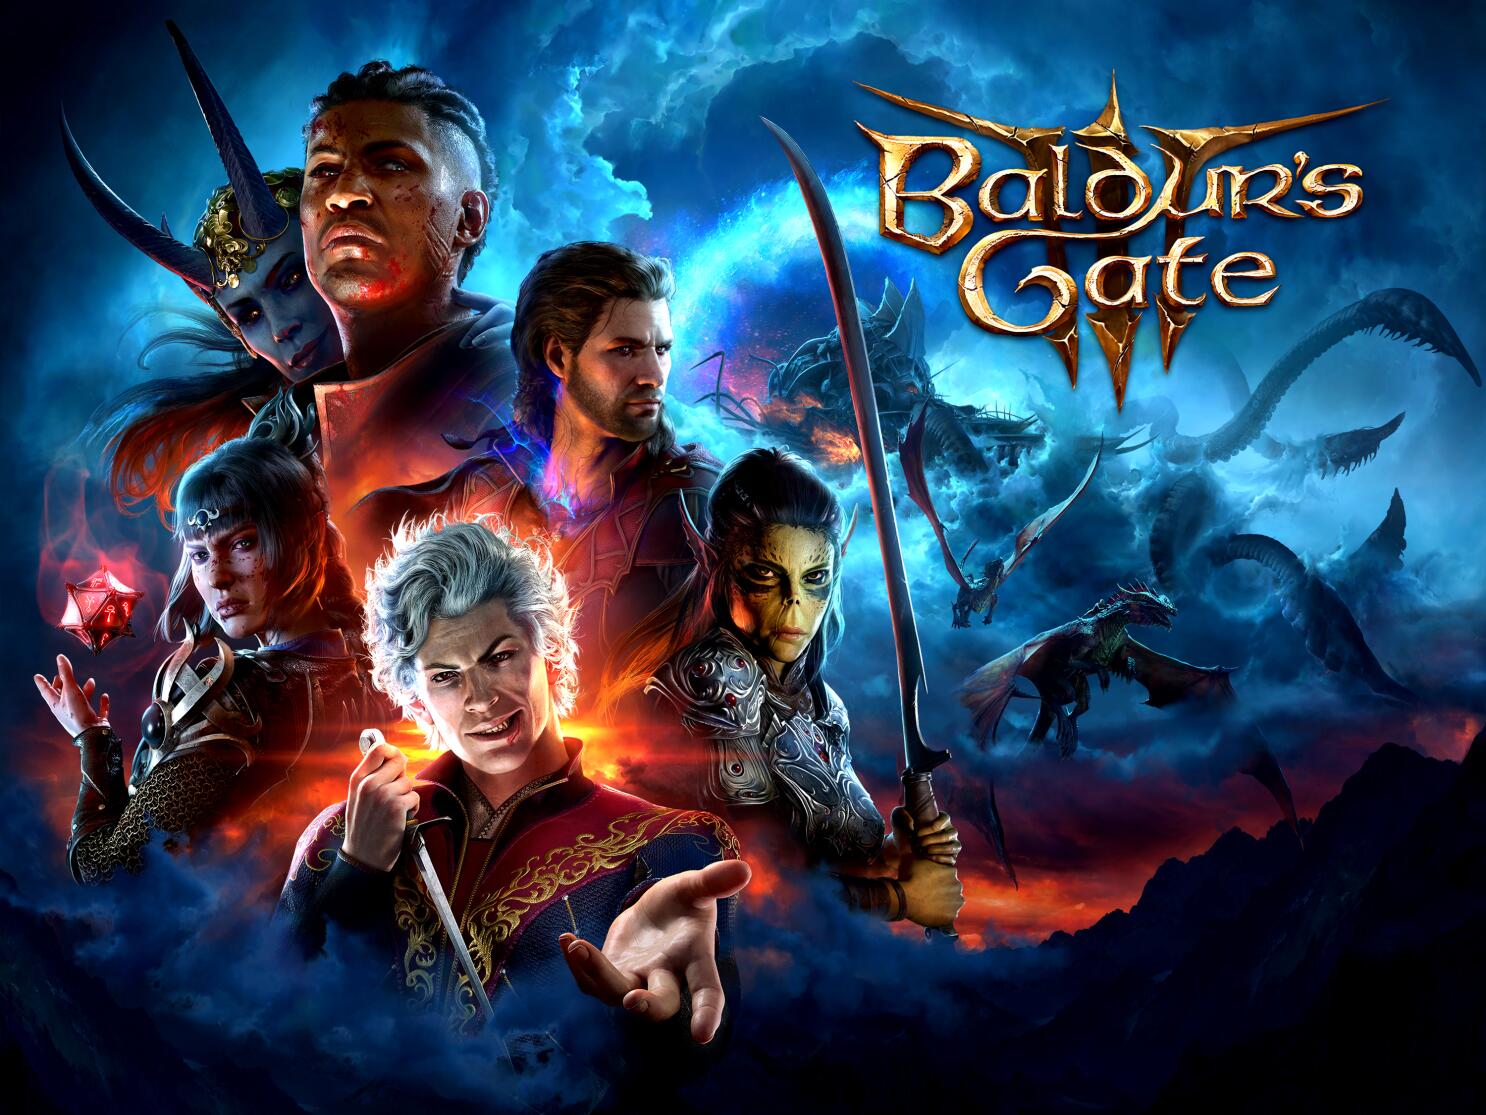 Will Baldur's Gate 3 have Split-Screen Co-op?